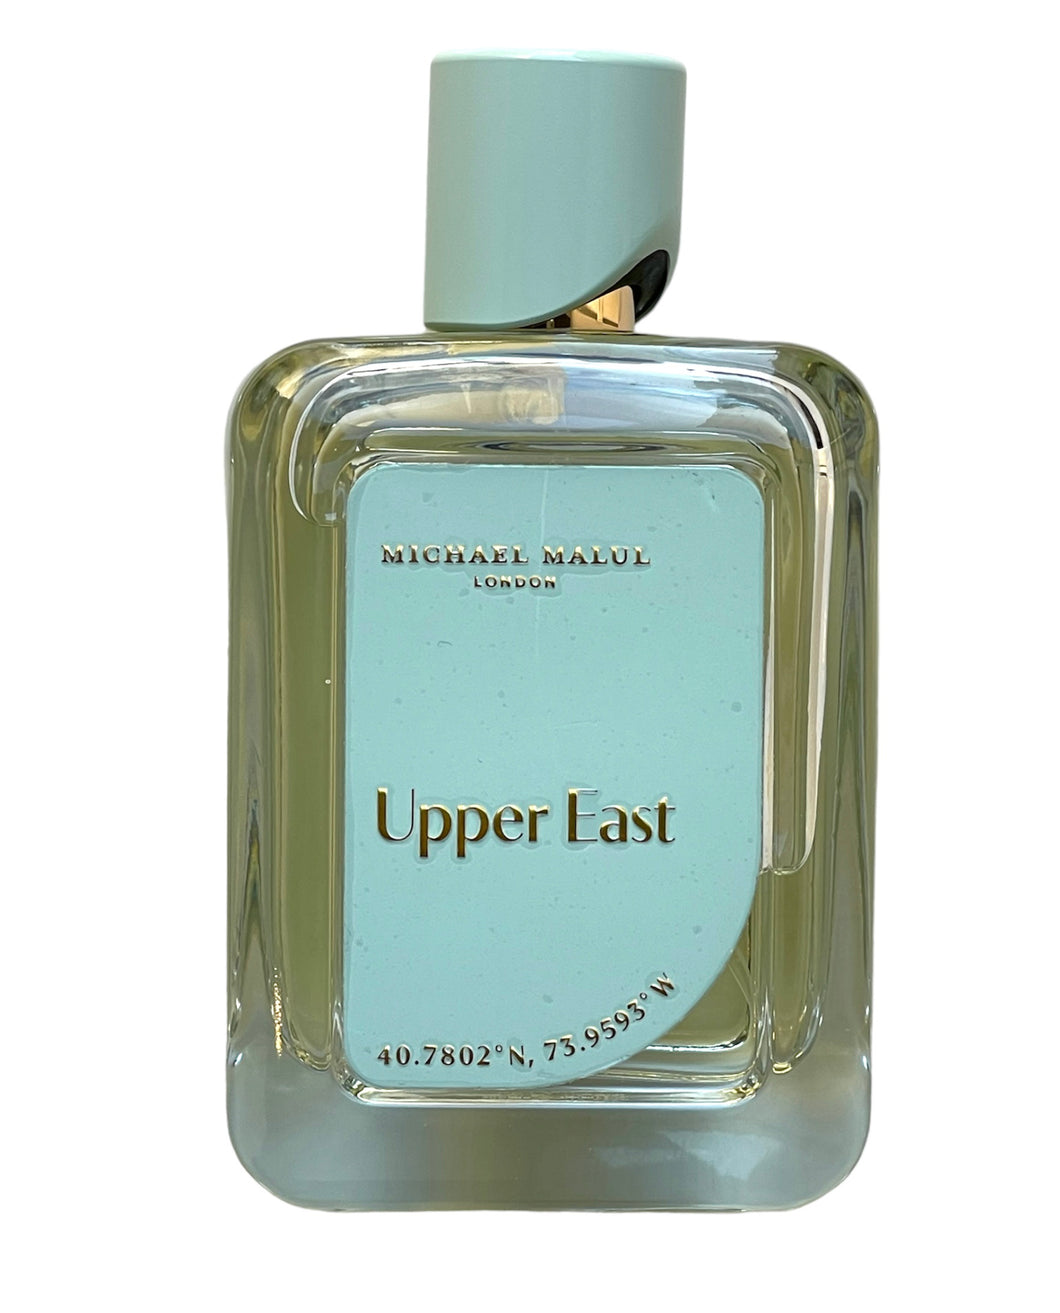 upper east michael malul eau de parfum 3.4oz for womans - alwaysspecialgifts.com